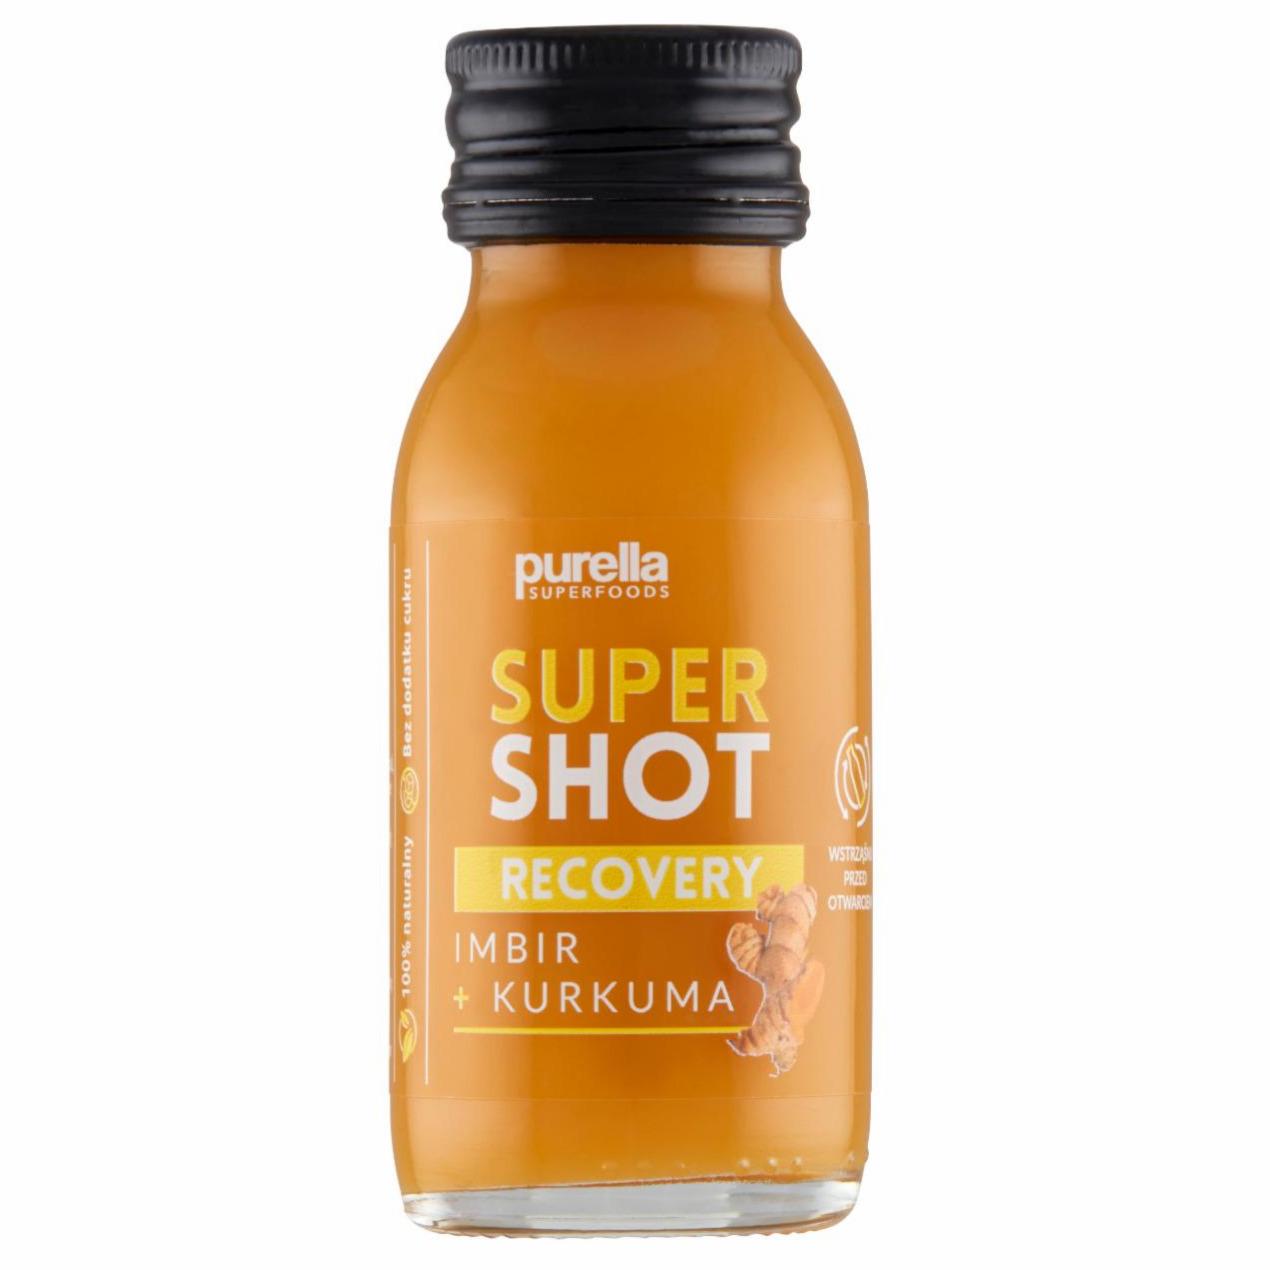 Zdjęcia - Supershot Recovery imbir + kurkuma Purella Superfoods